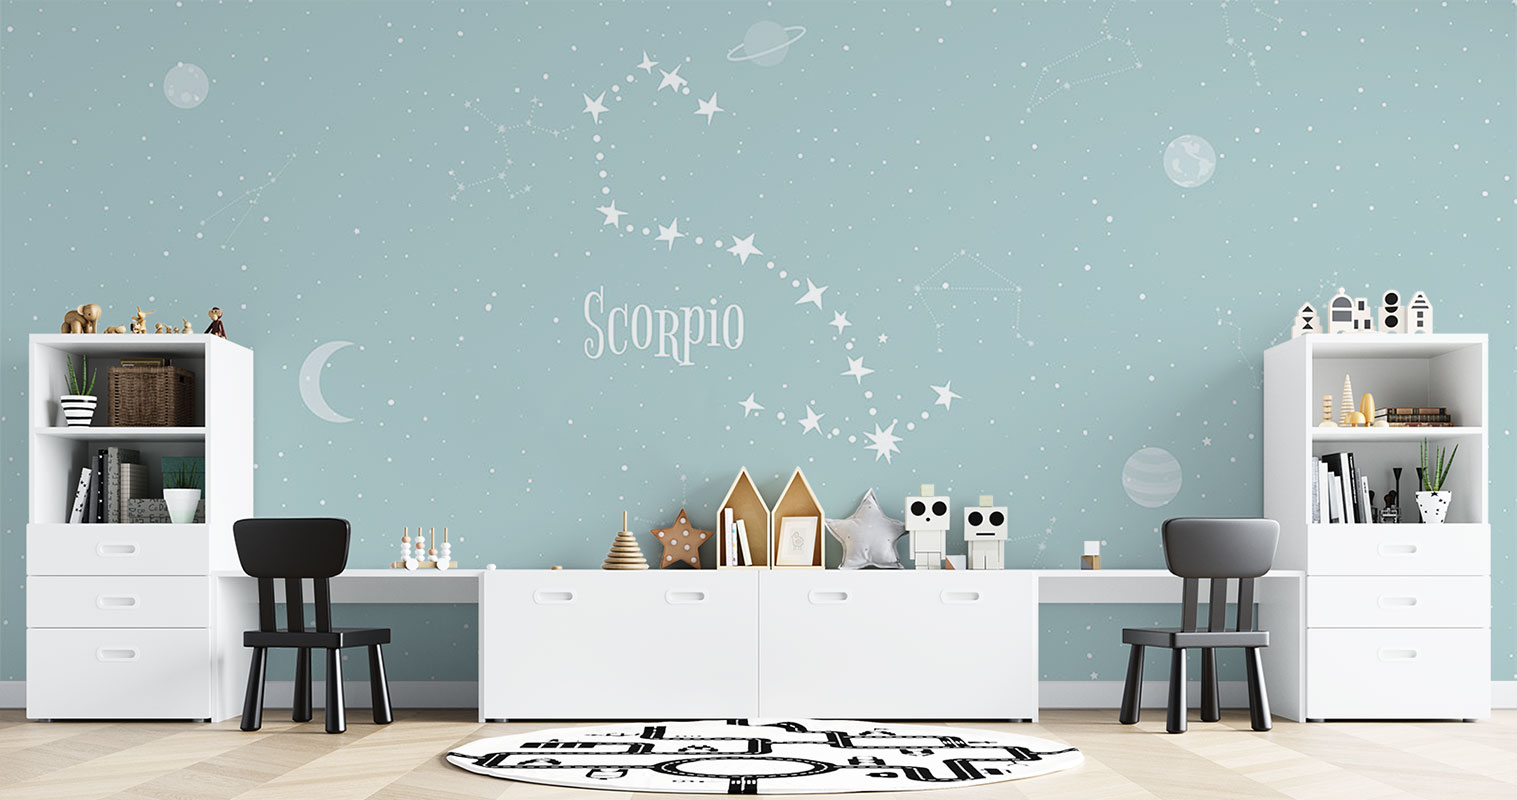 Horoscope Scorpio – Light Blue